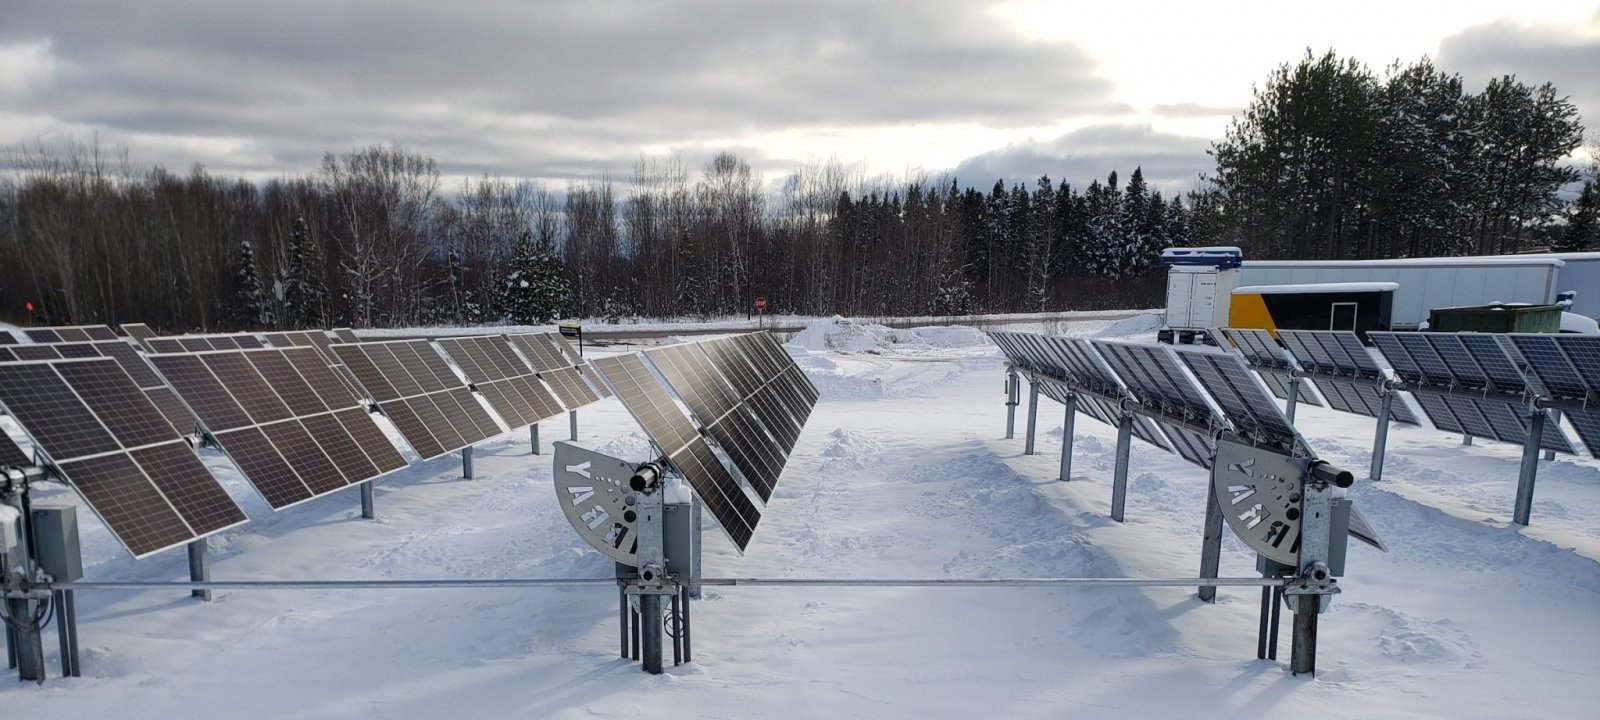 Solar panel array in winter.